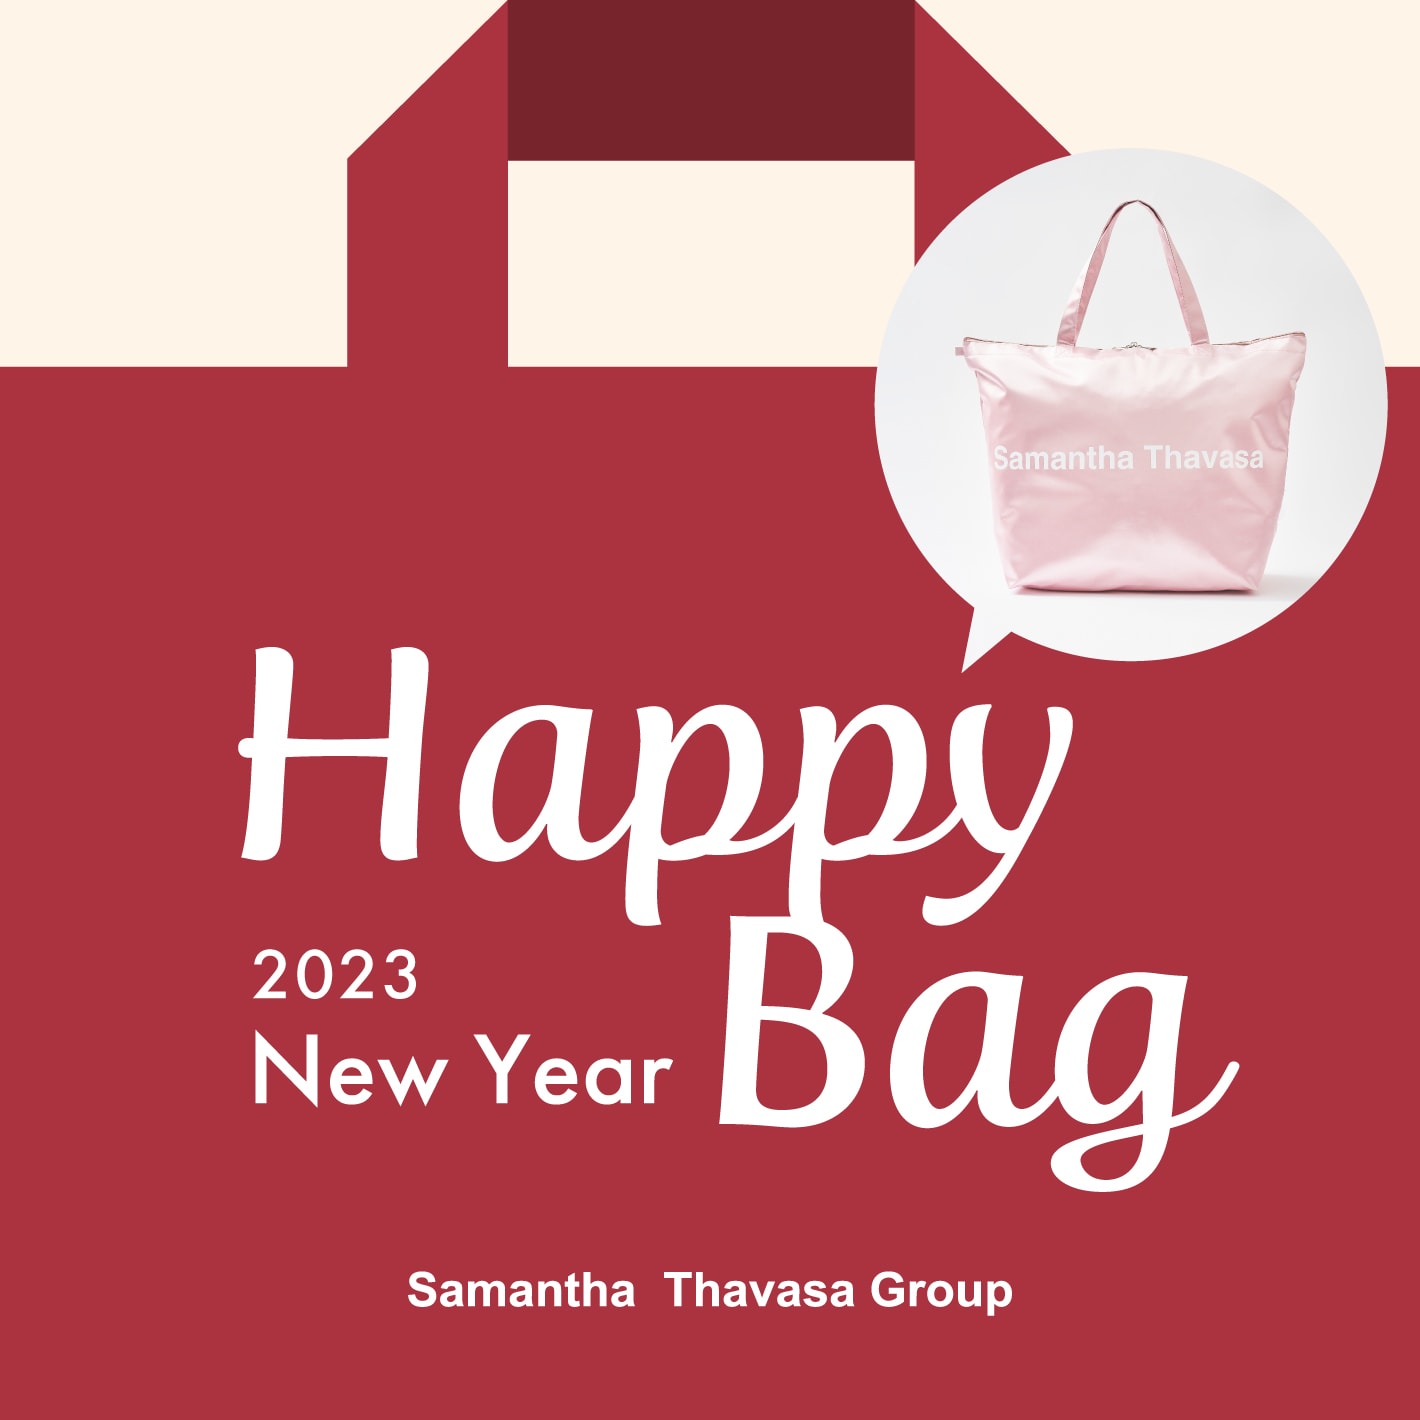 2023 New Year Happy Bag | Samantha Thavasa